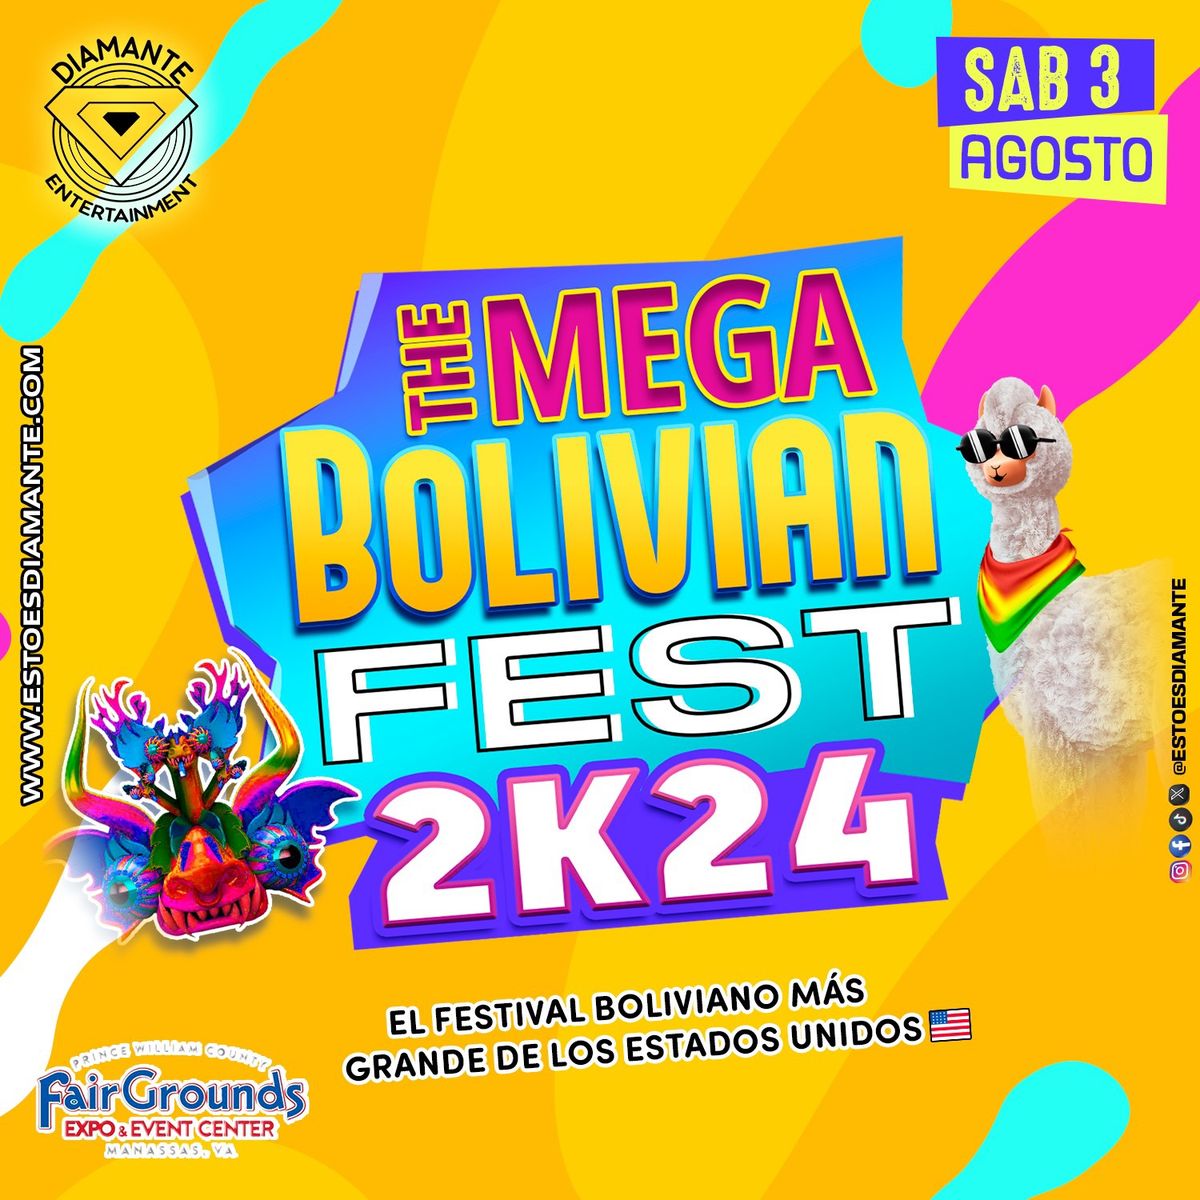 THE MEGA BOLIVIAN FEST 2K24